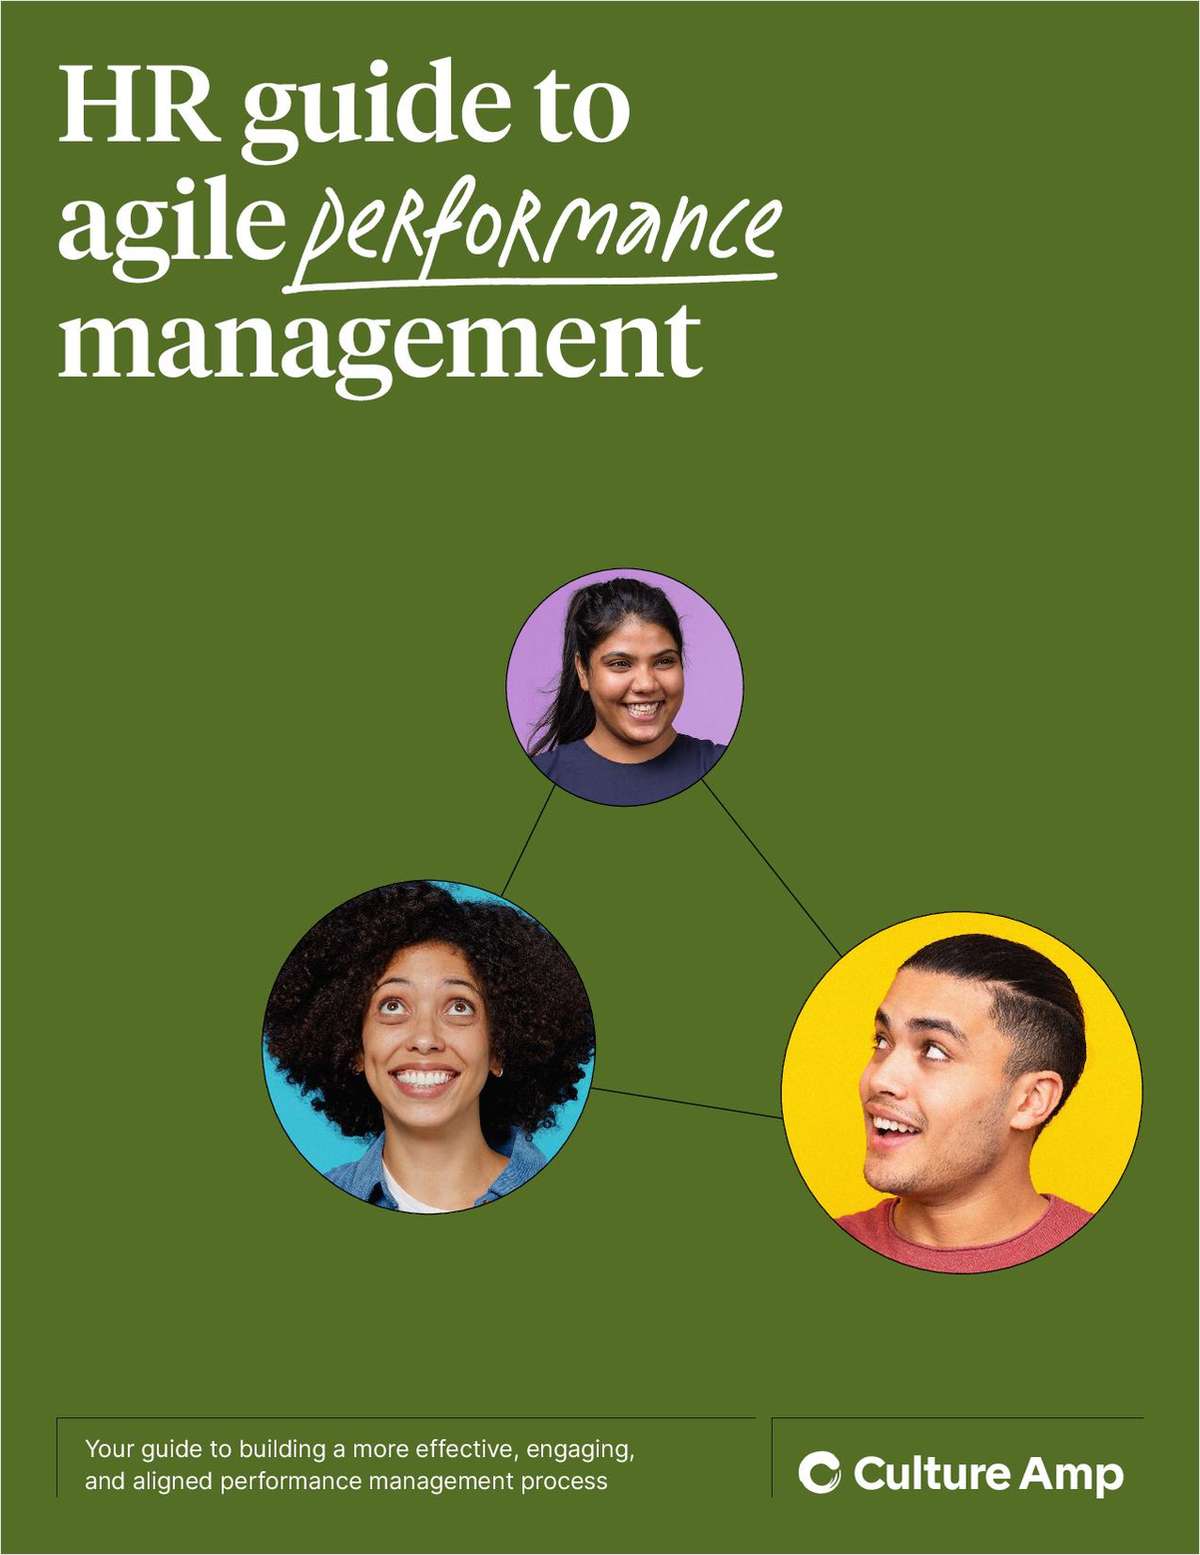 Flexible performance management